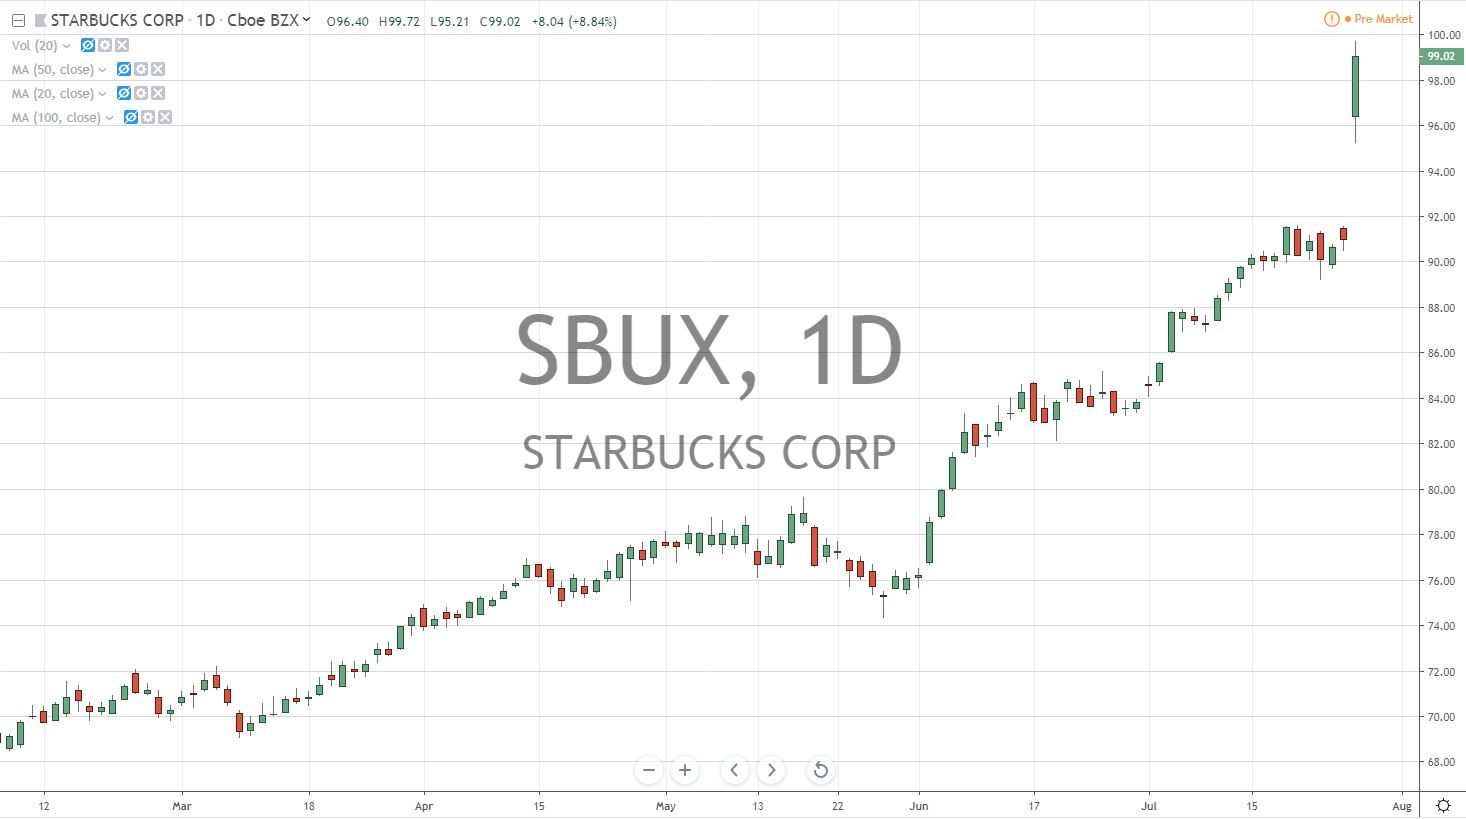 Starbucks Corp SBUX Stock Chart 7.29.19